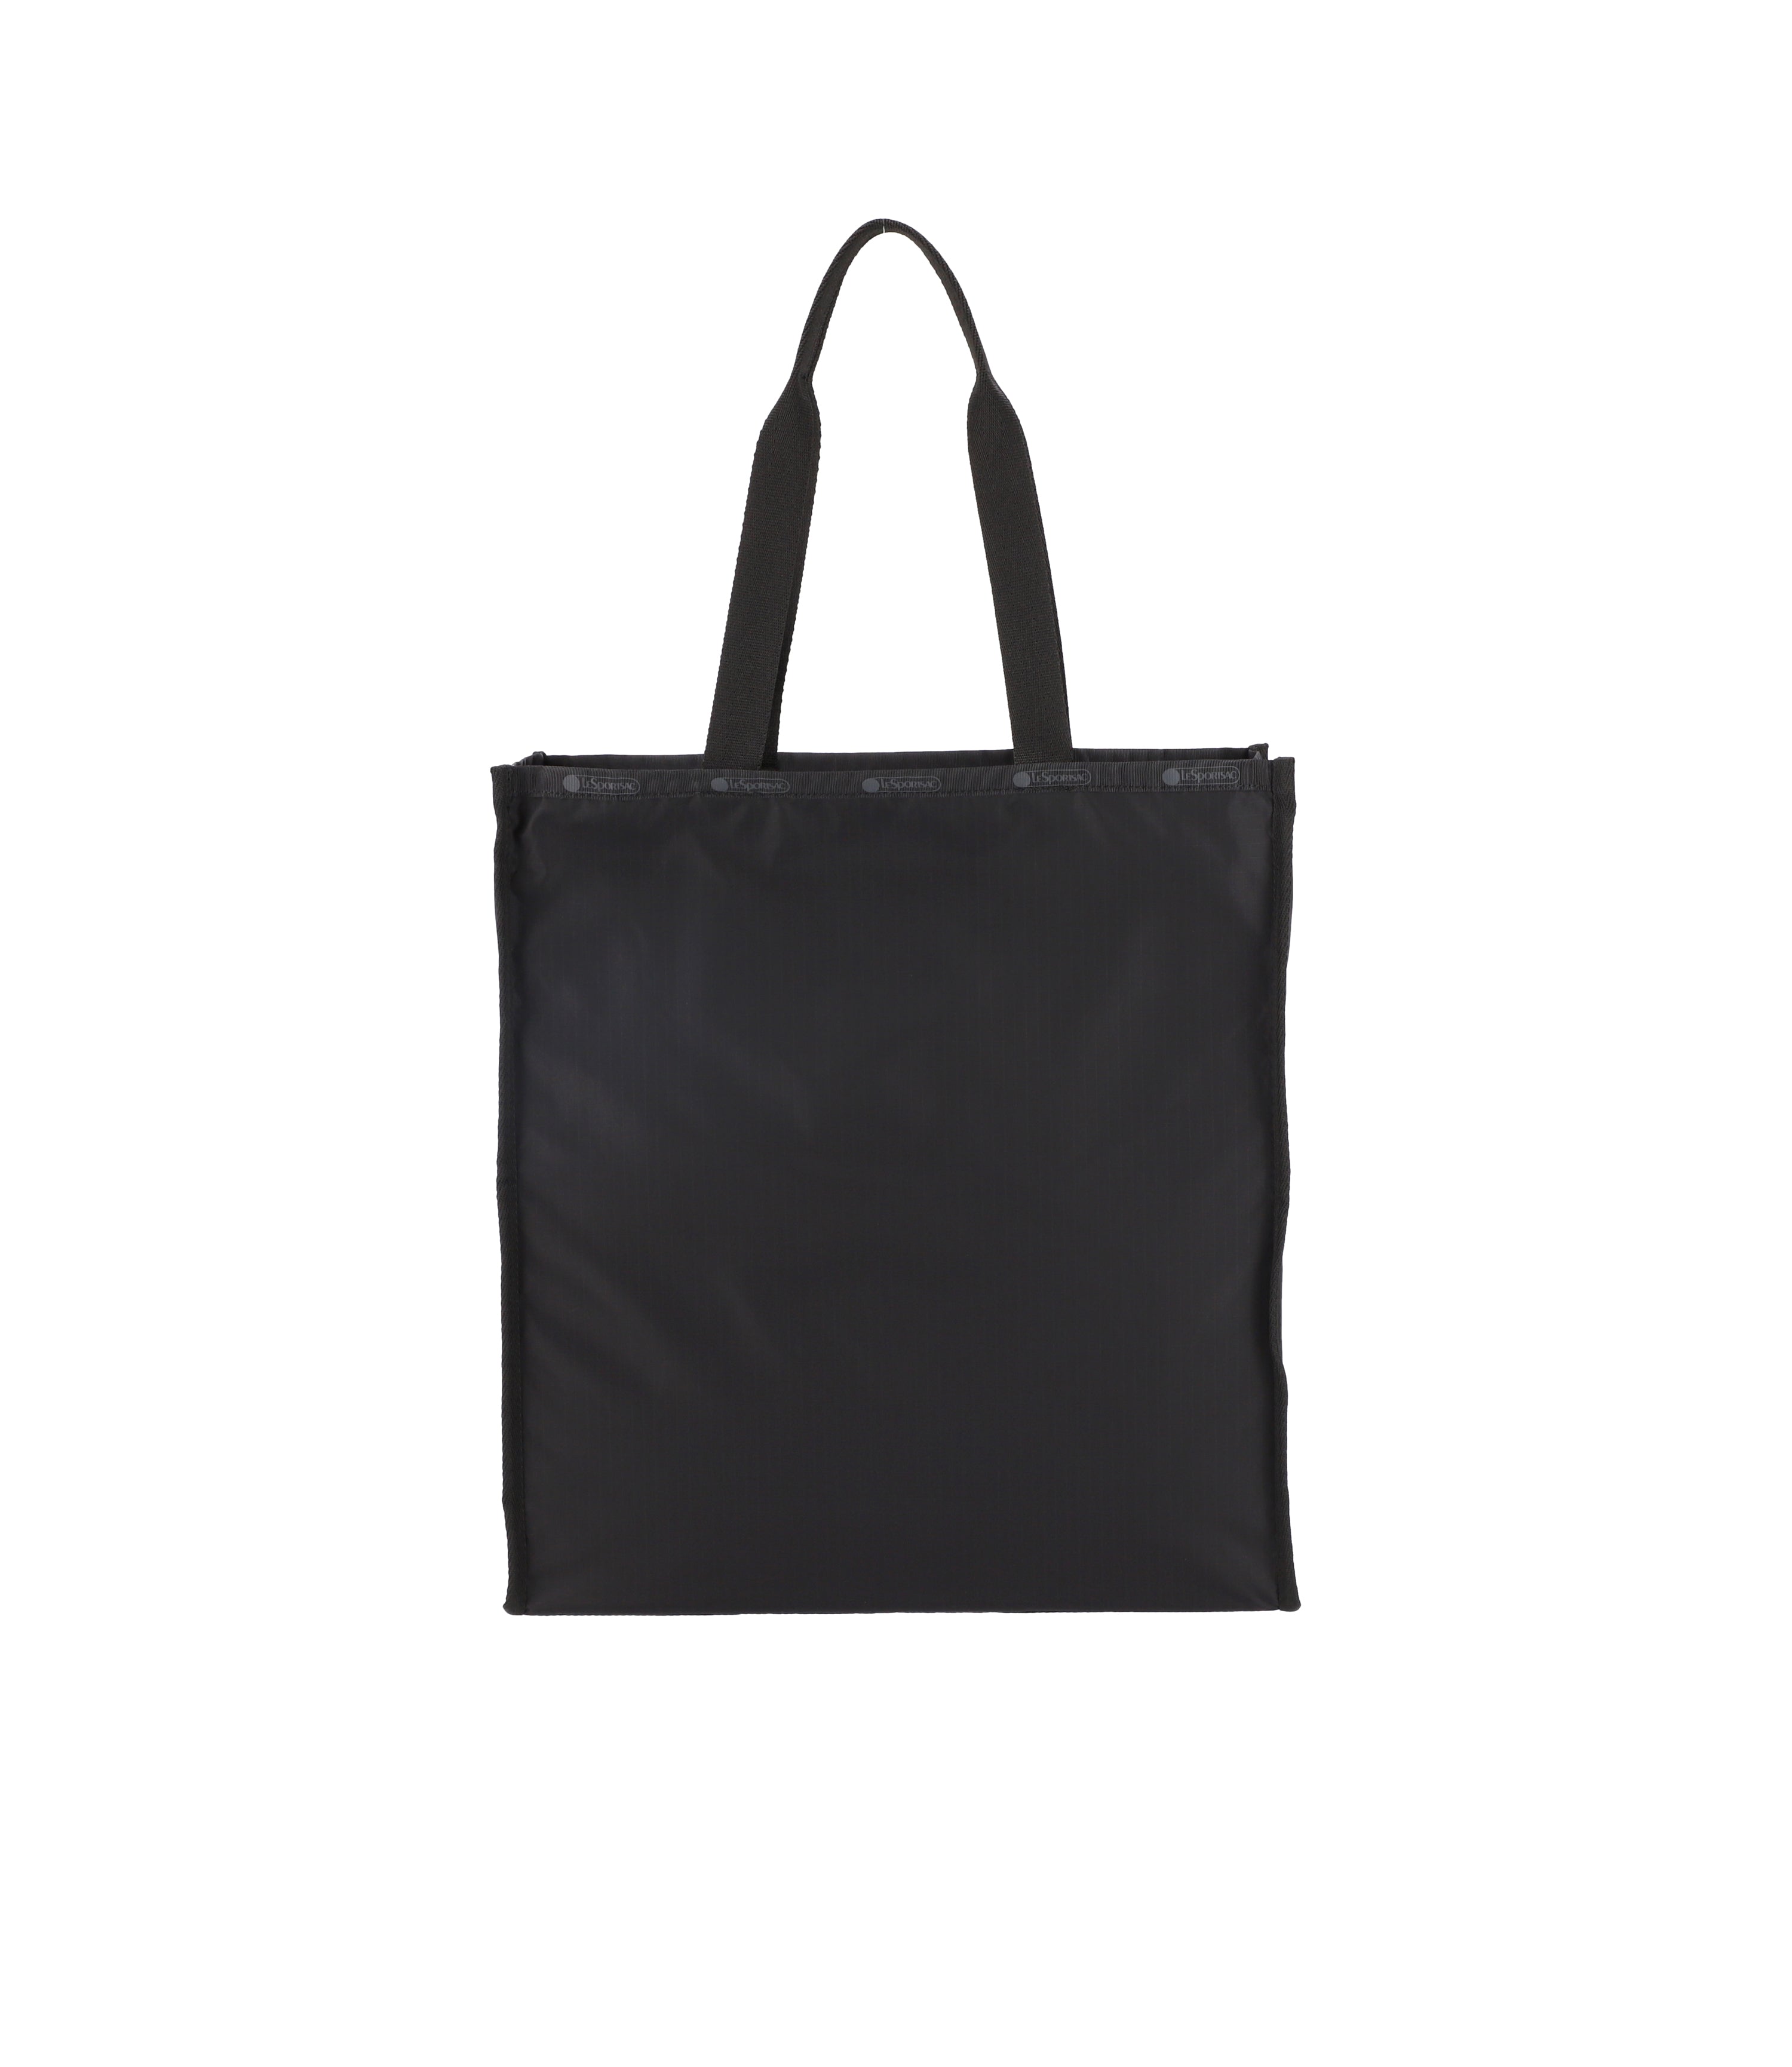 Black 100% natural cotton tote bag from Keepsake Creative